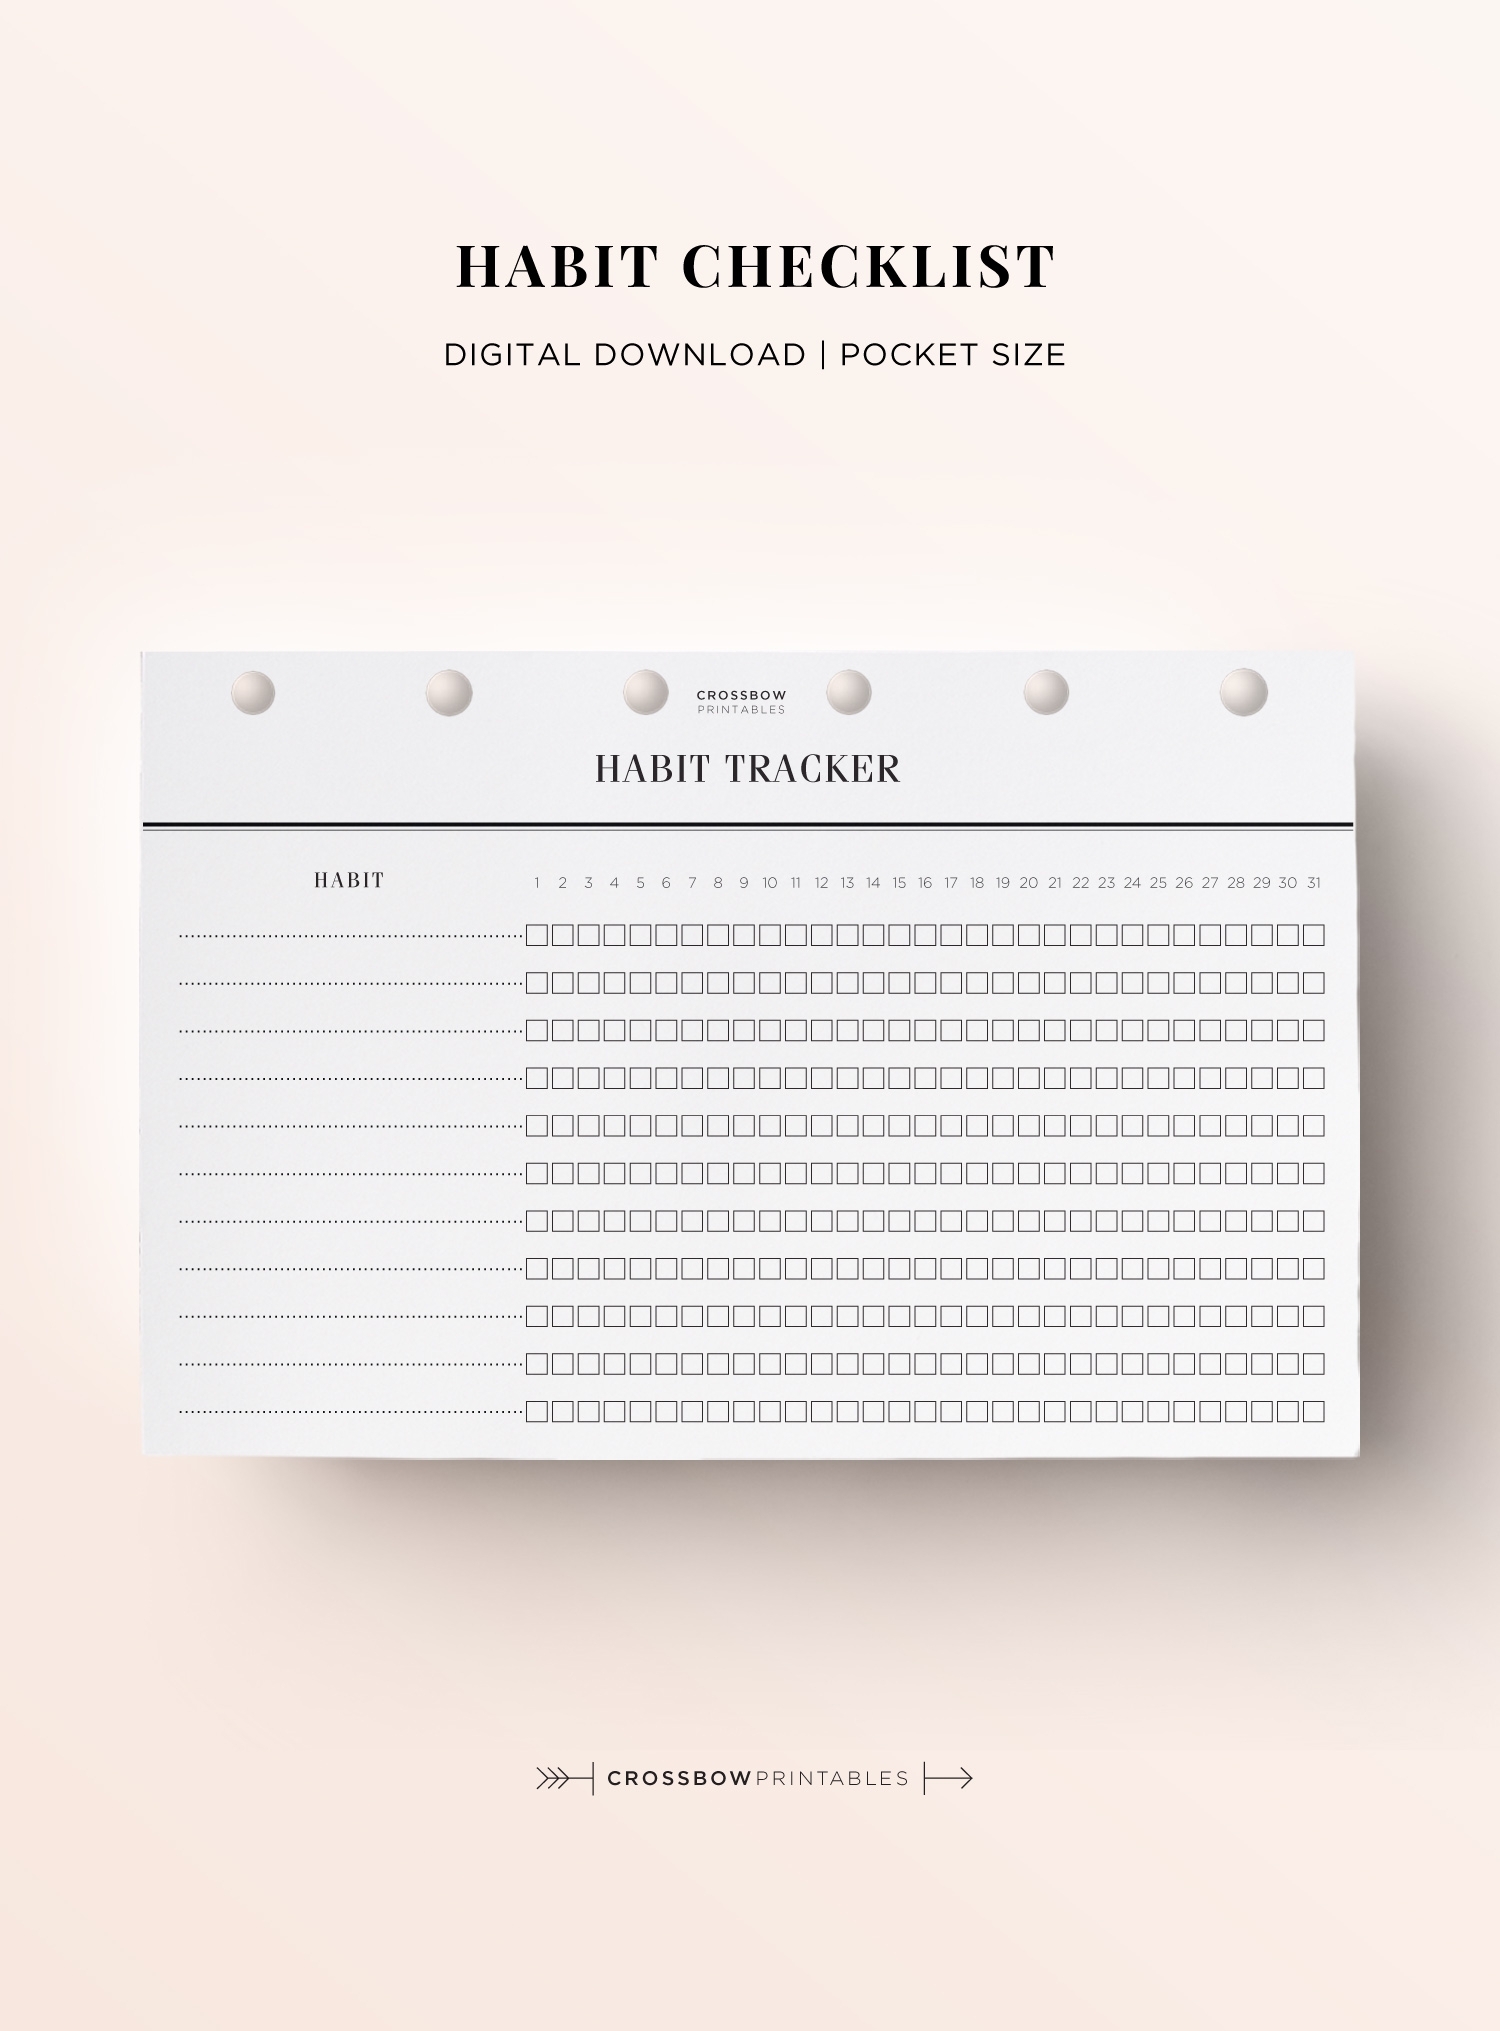 Habit Tracker Checklist: Printable Pocket Size Planner